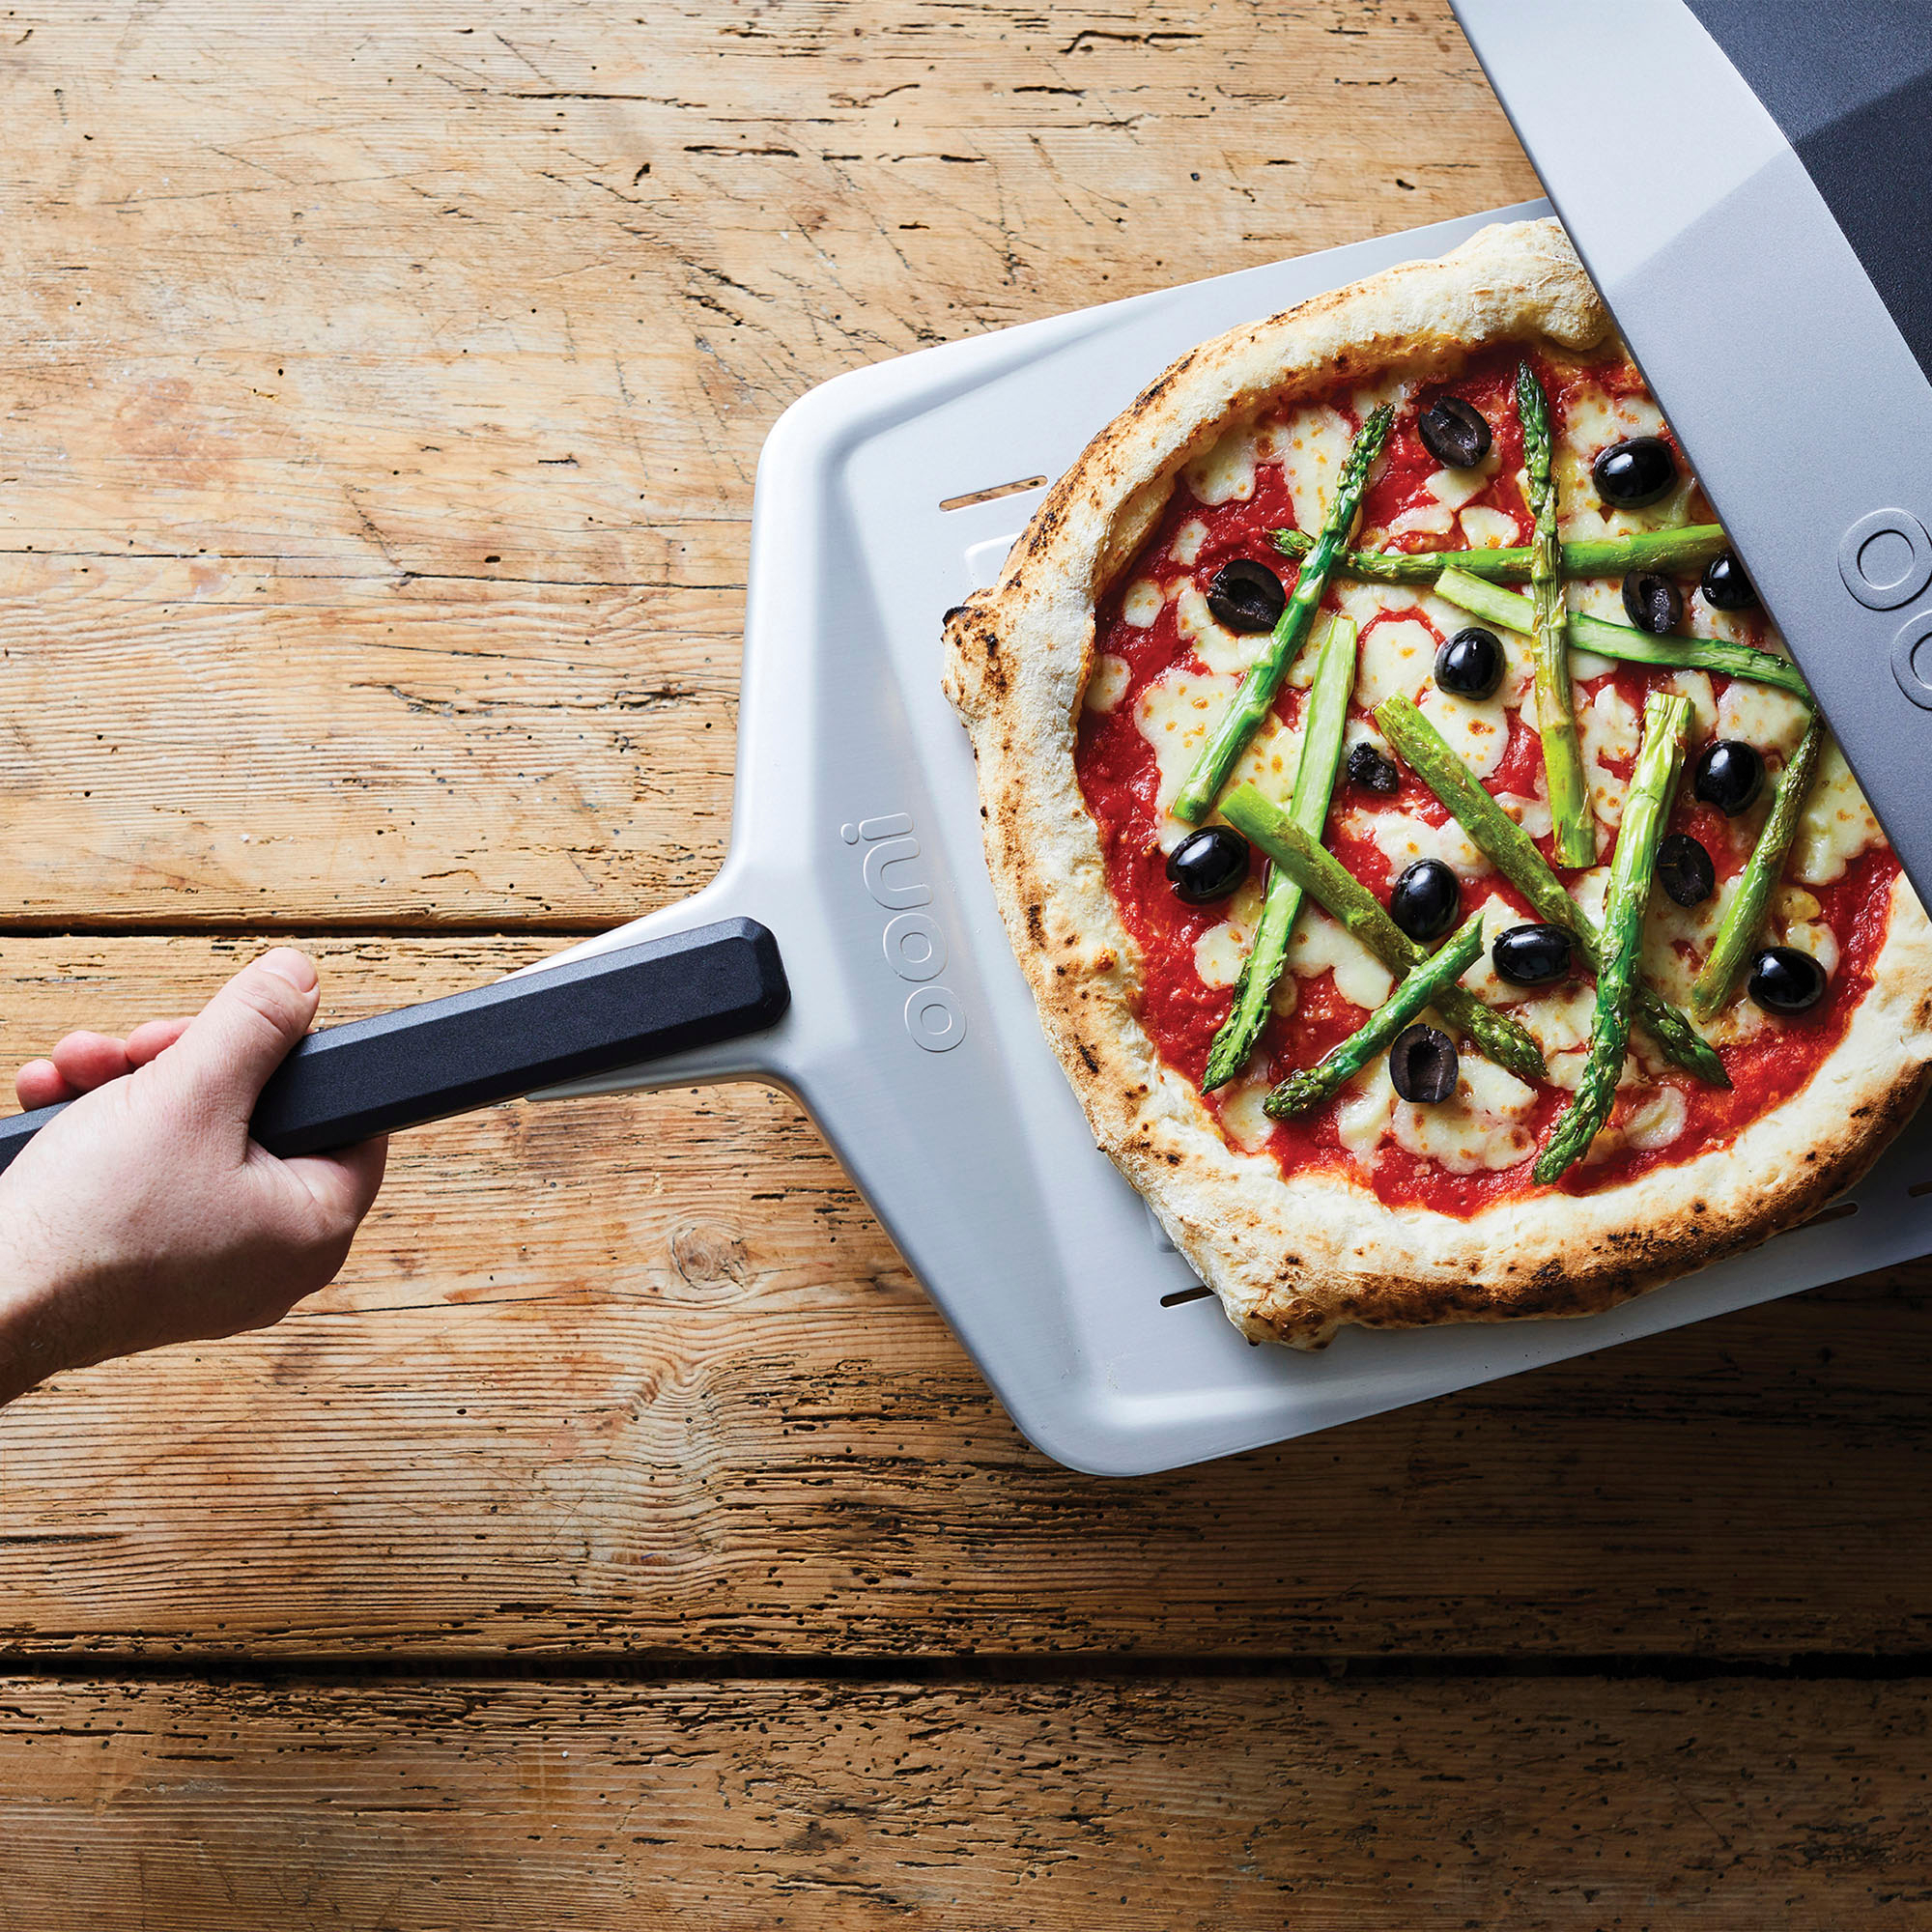 Ooni Aluminum Pizza Peel 12 - Ooni Outdoor Pizza Oven Accessories